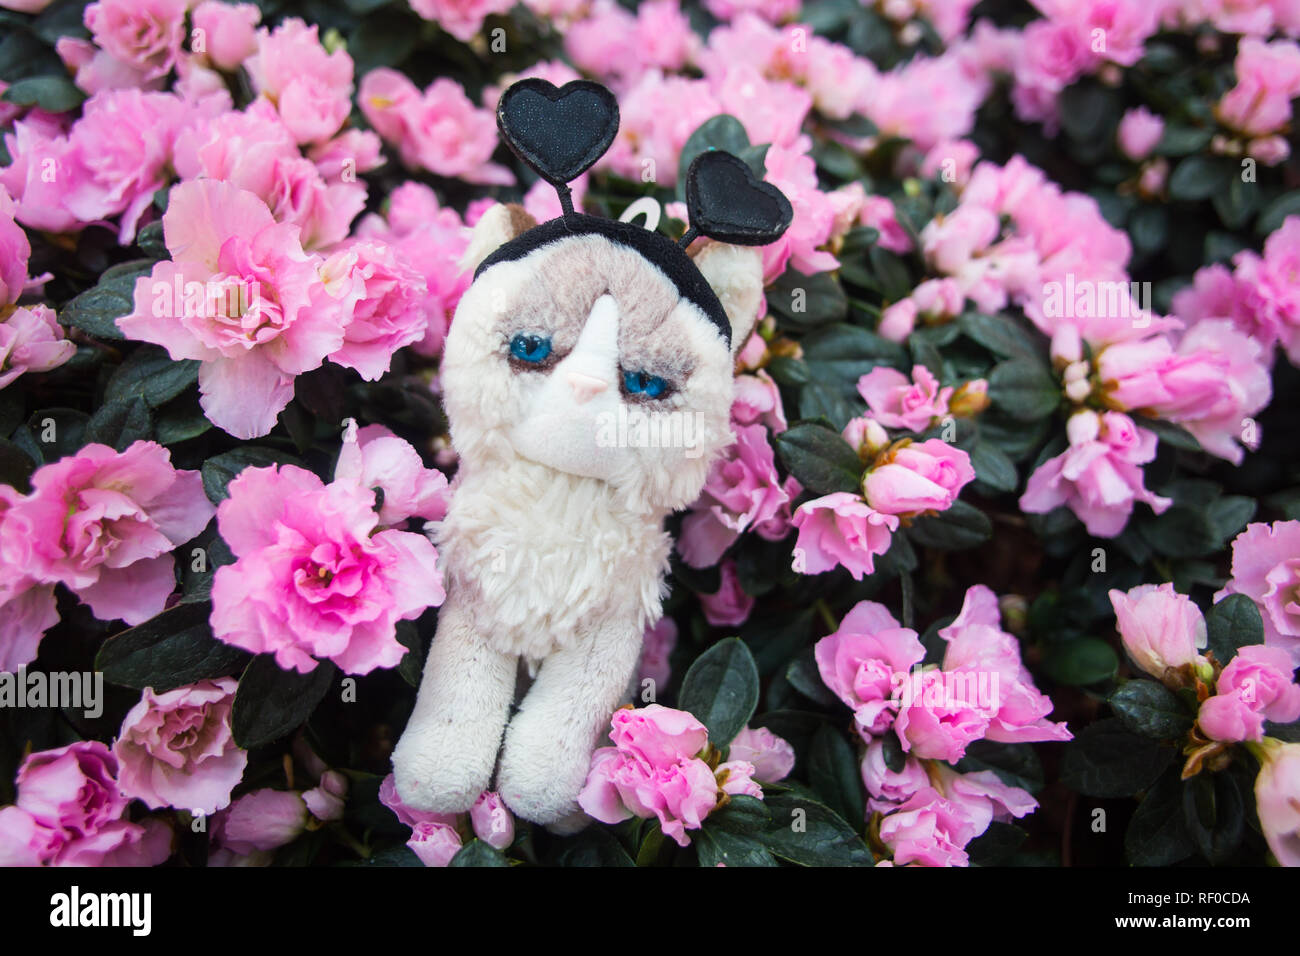 Grumpy cat plüschig mit schwarzen Herzen Bügel gegen Rosa Blumen posing Stockfoto